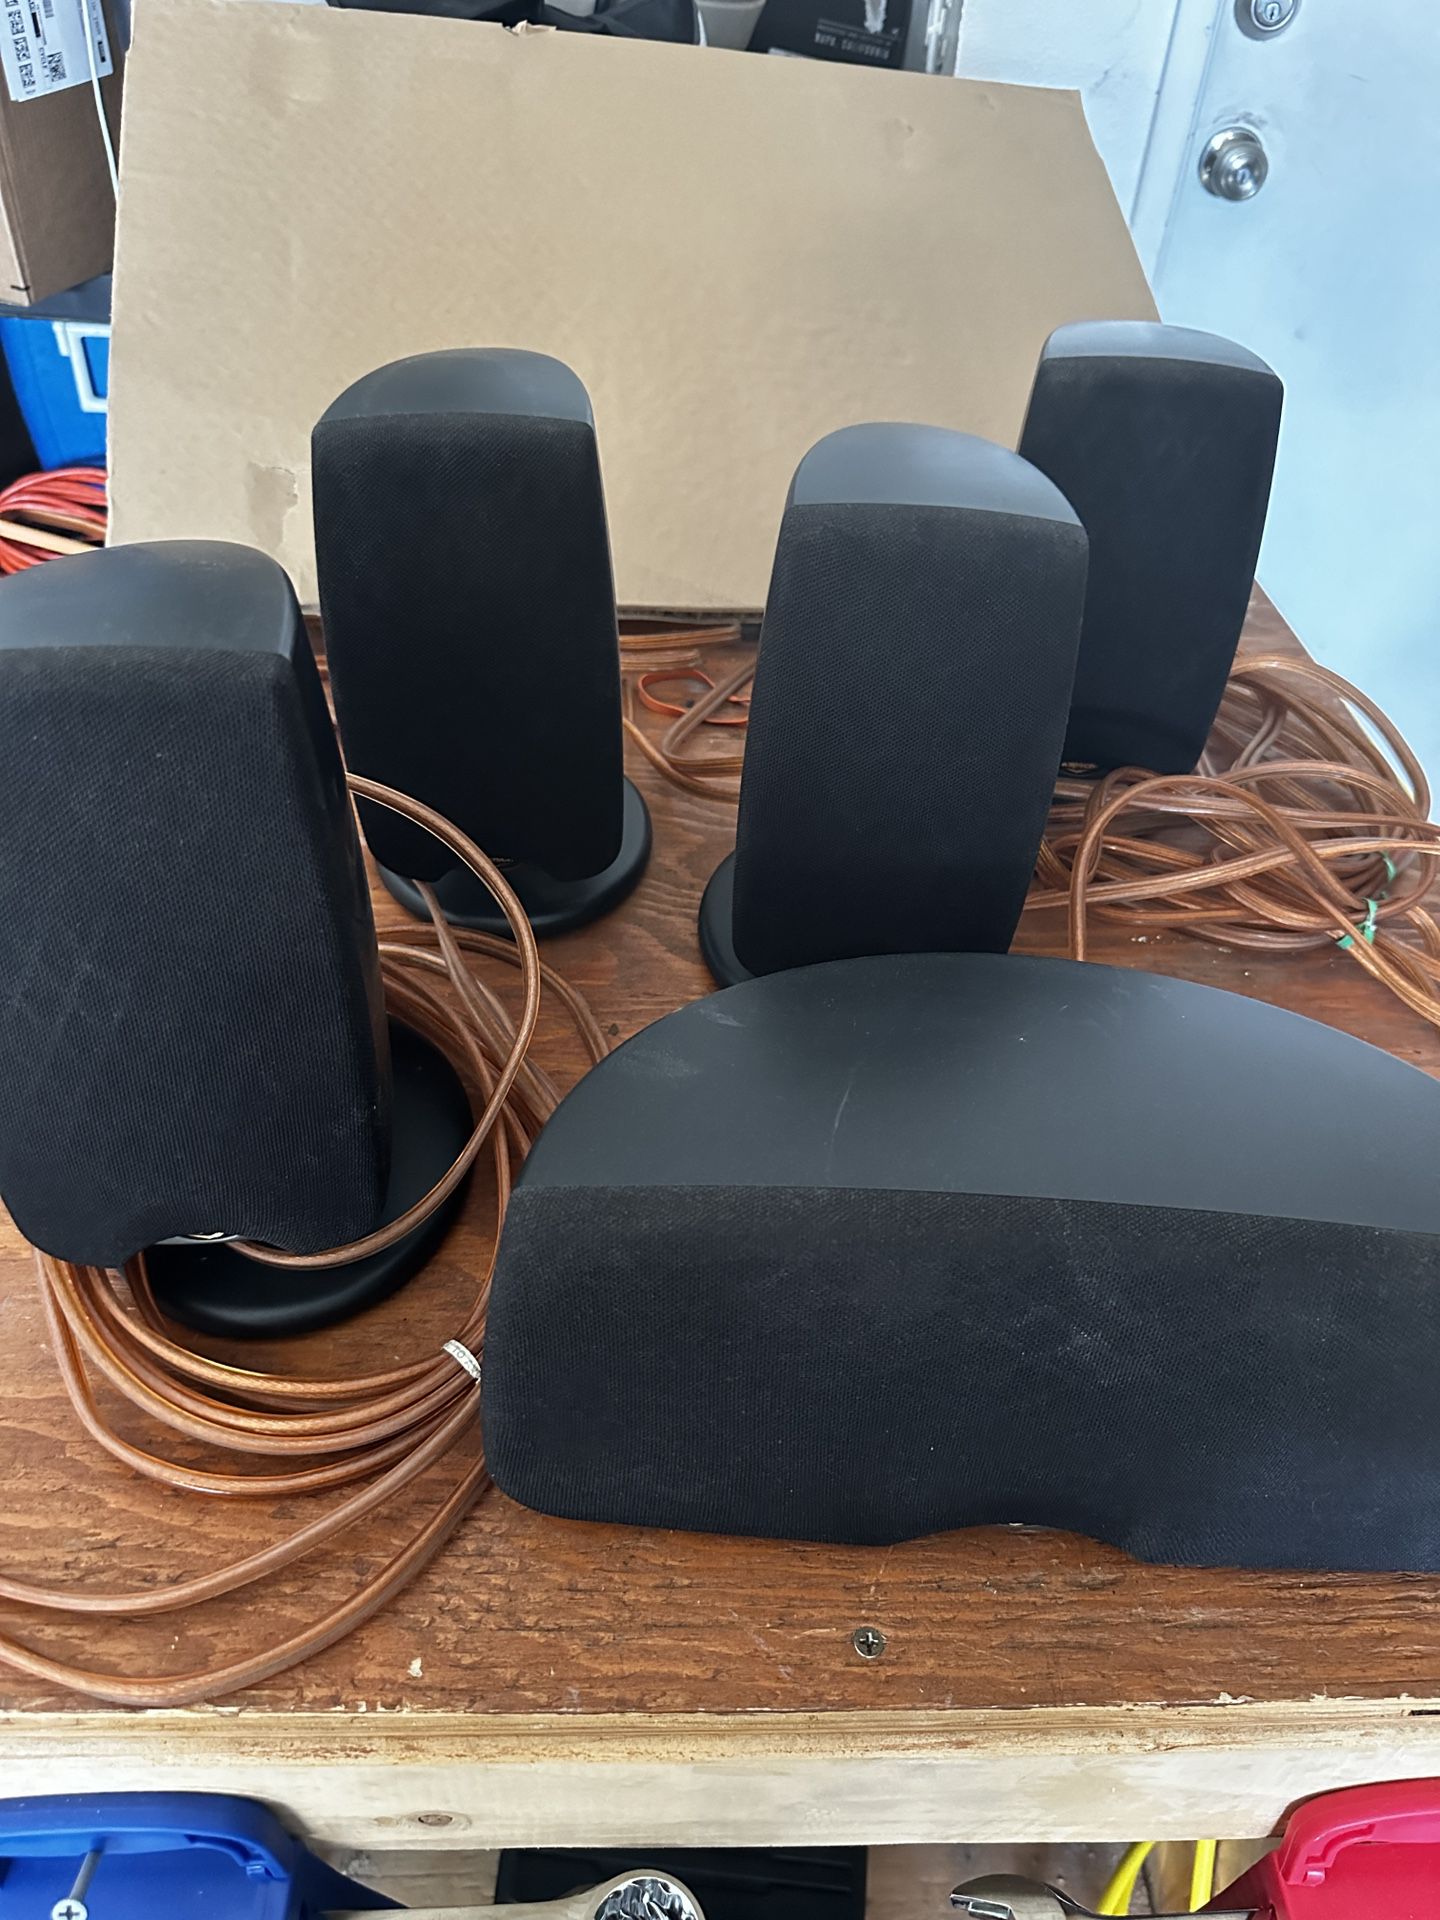 set of 5 klipsch speakers with heavy wire